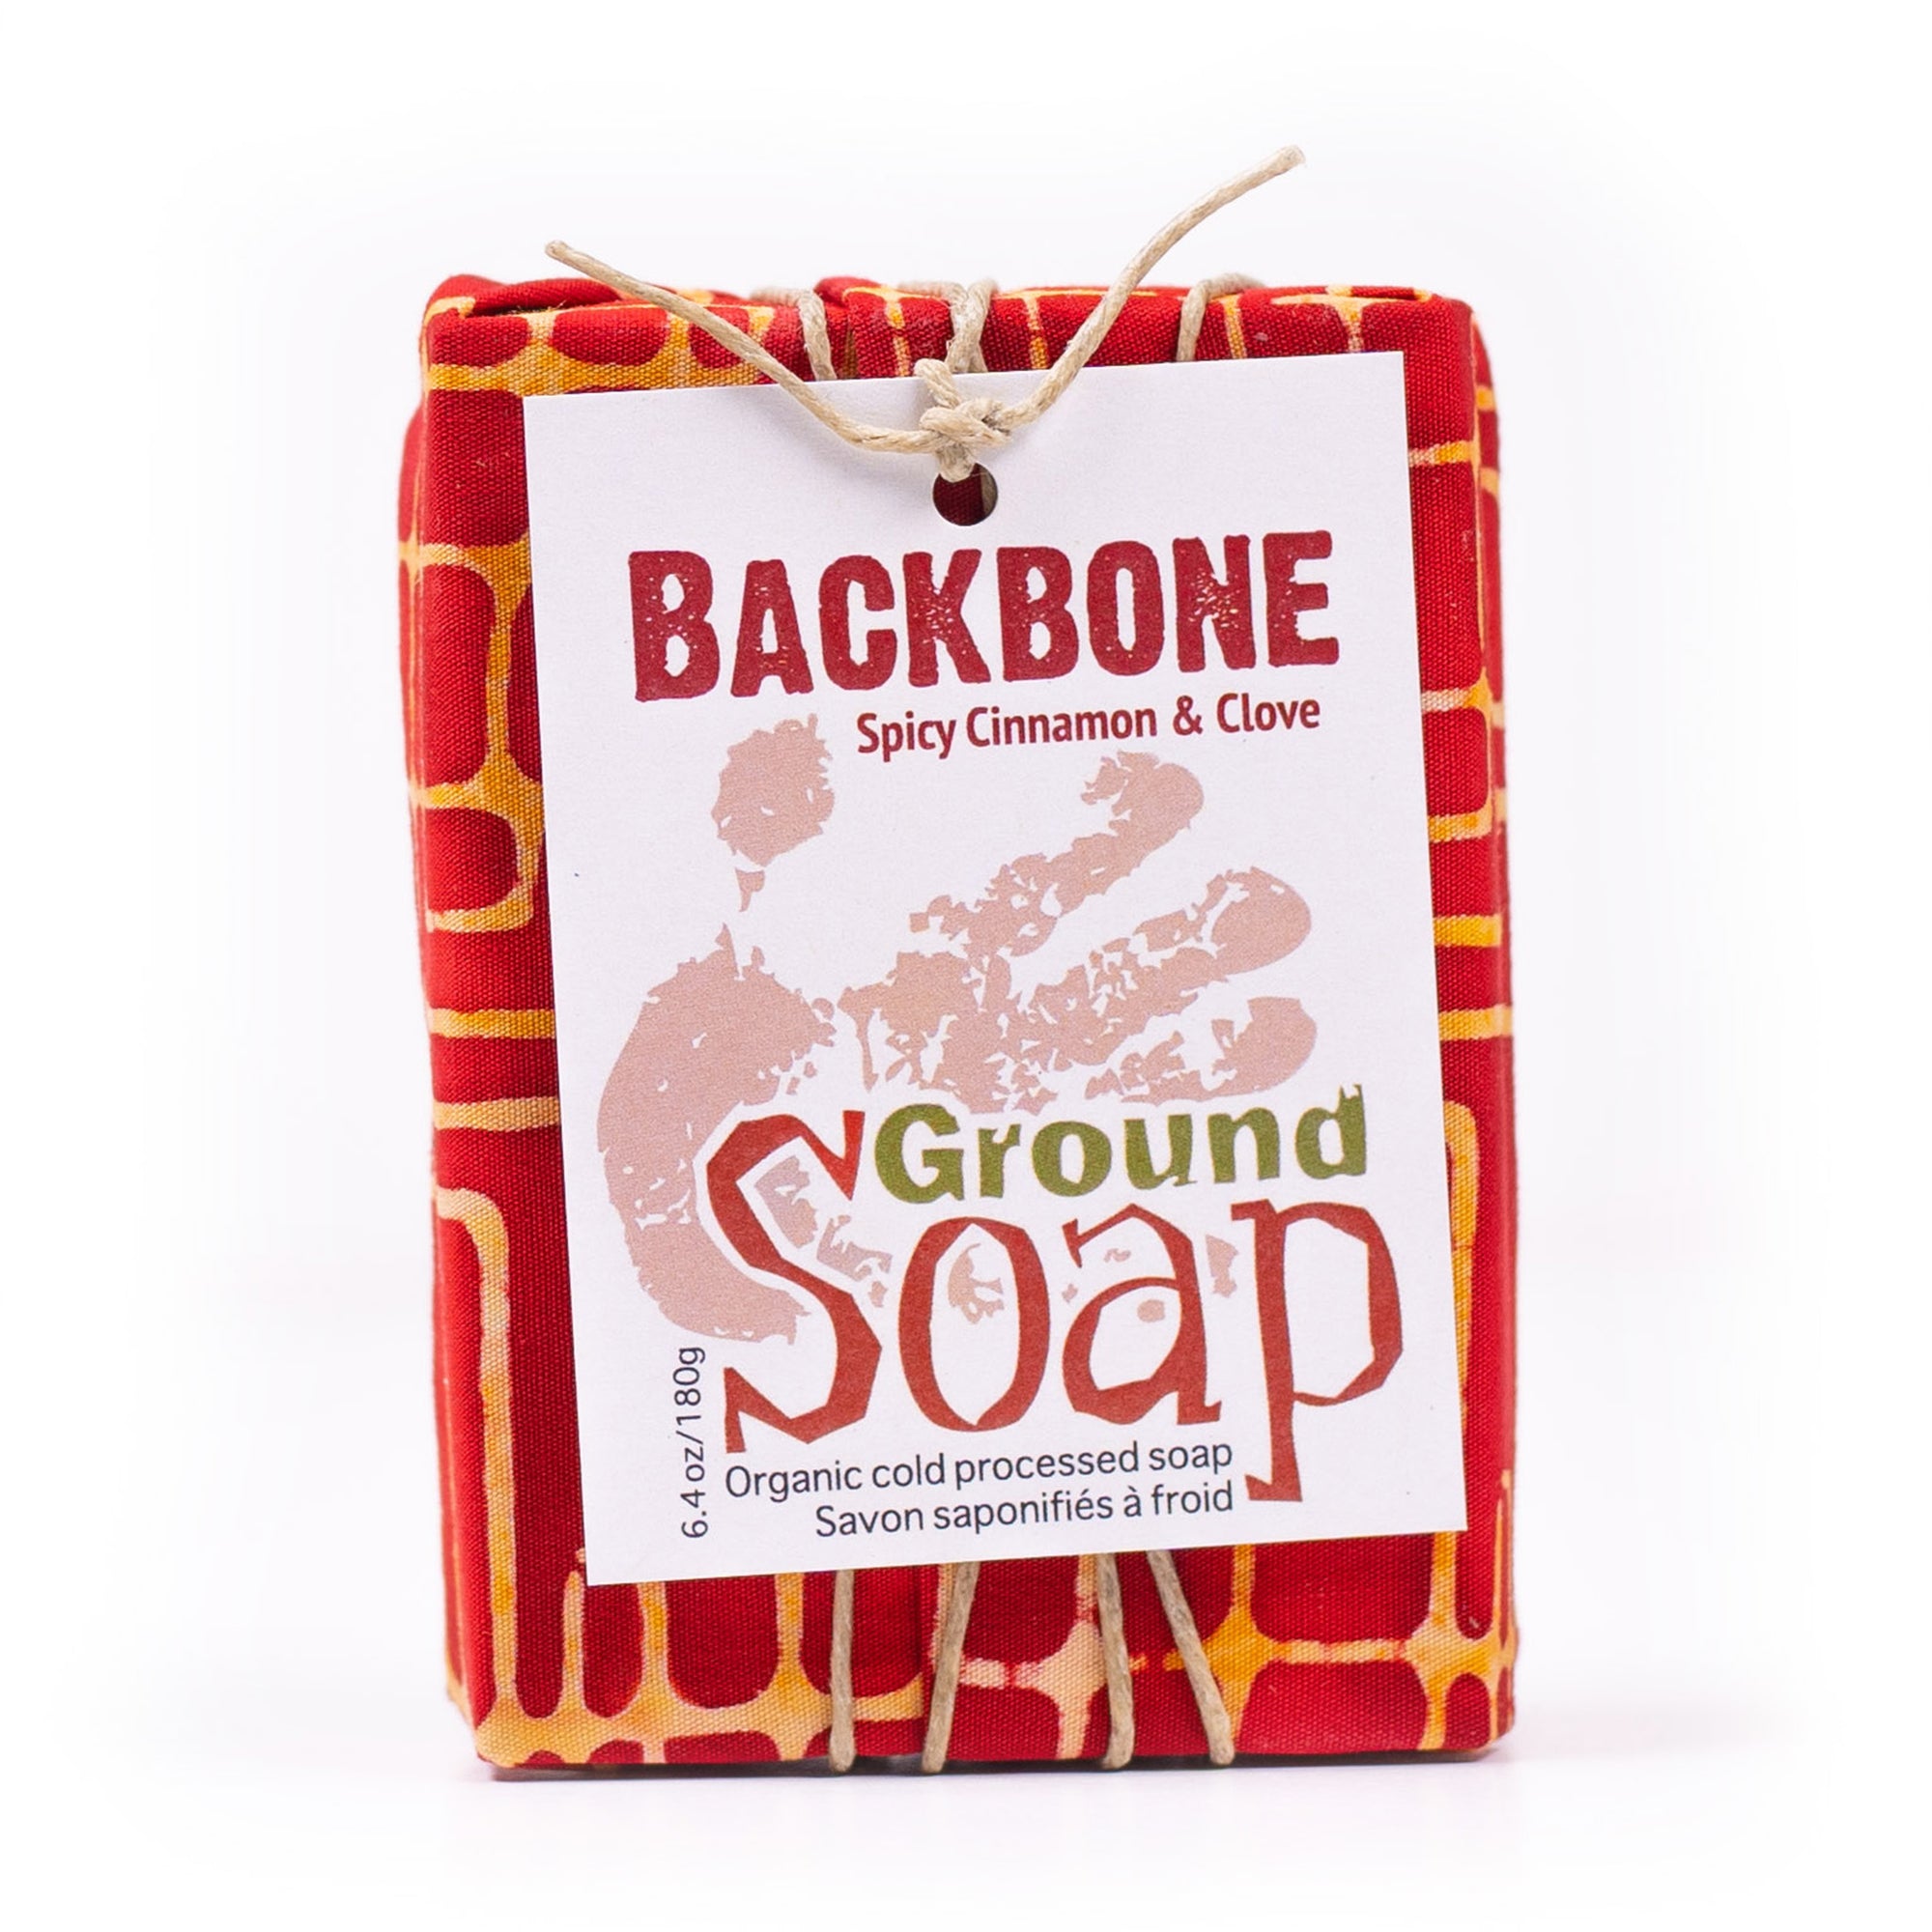 Backbone cinnamon essential oil organic bar soap from ground Soap. 